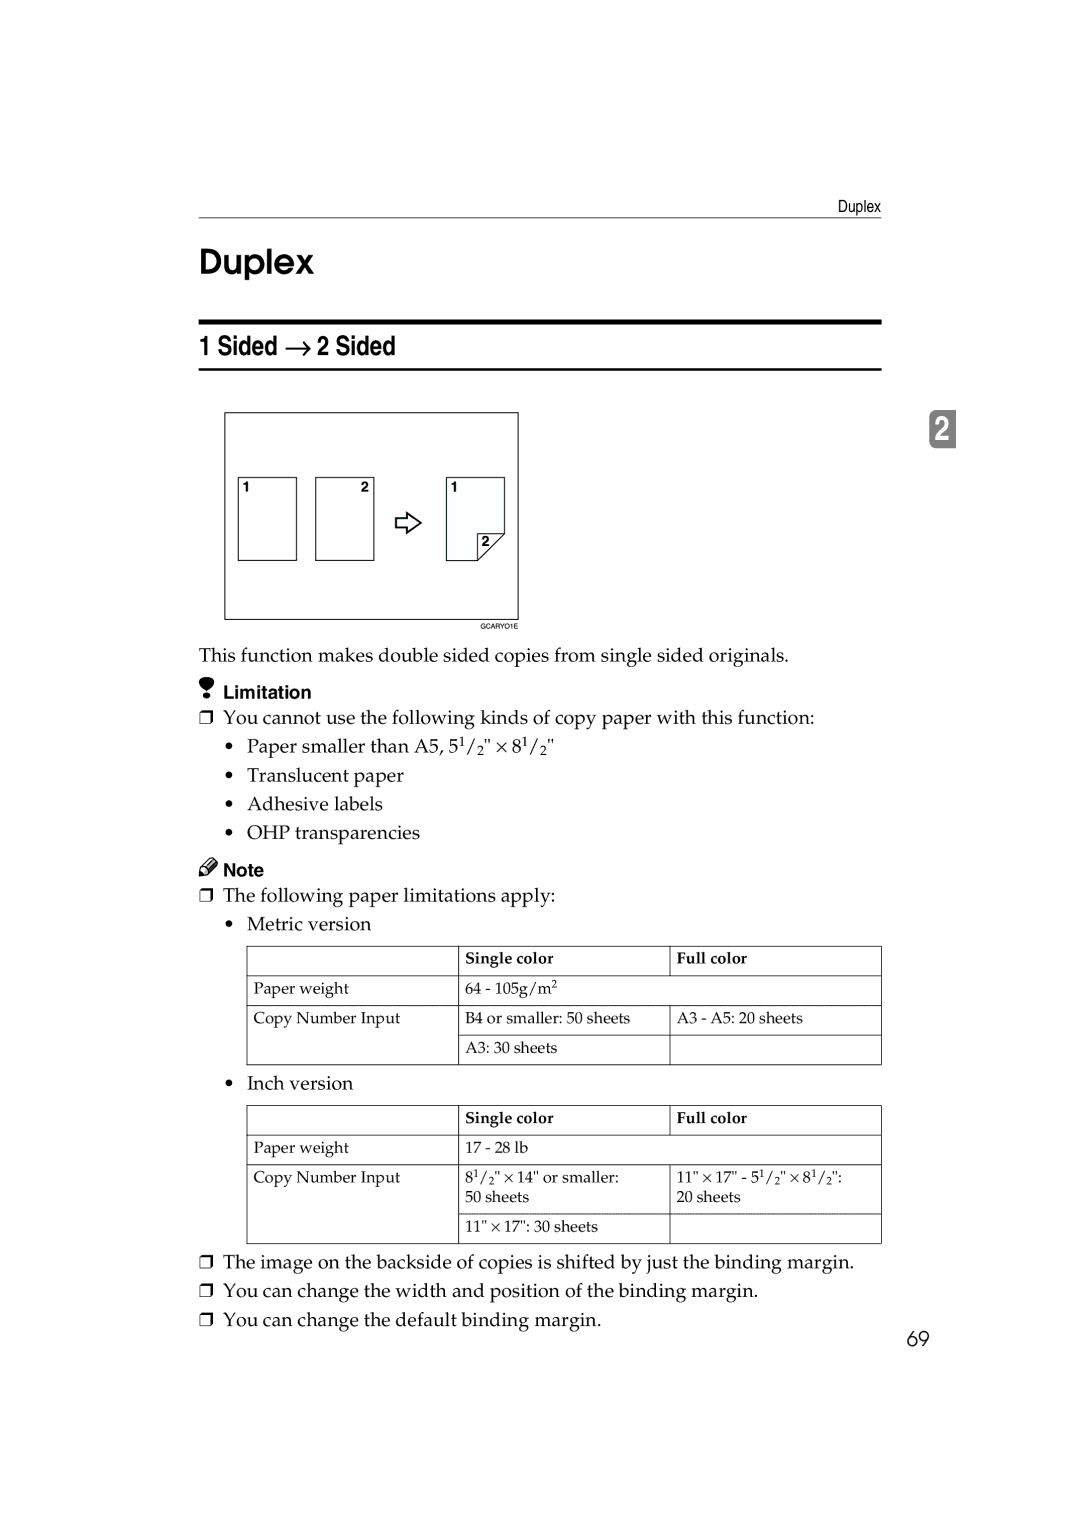 Ricoh 6513 manual Duplex, Sided → 2 Sided 